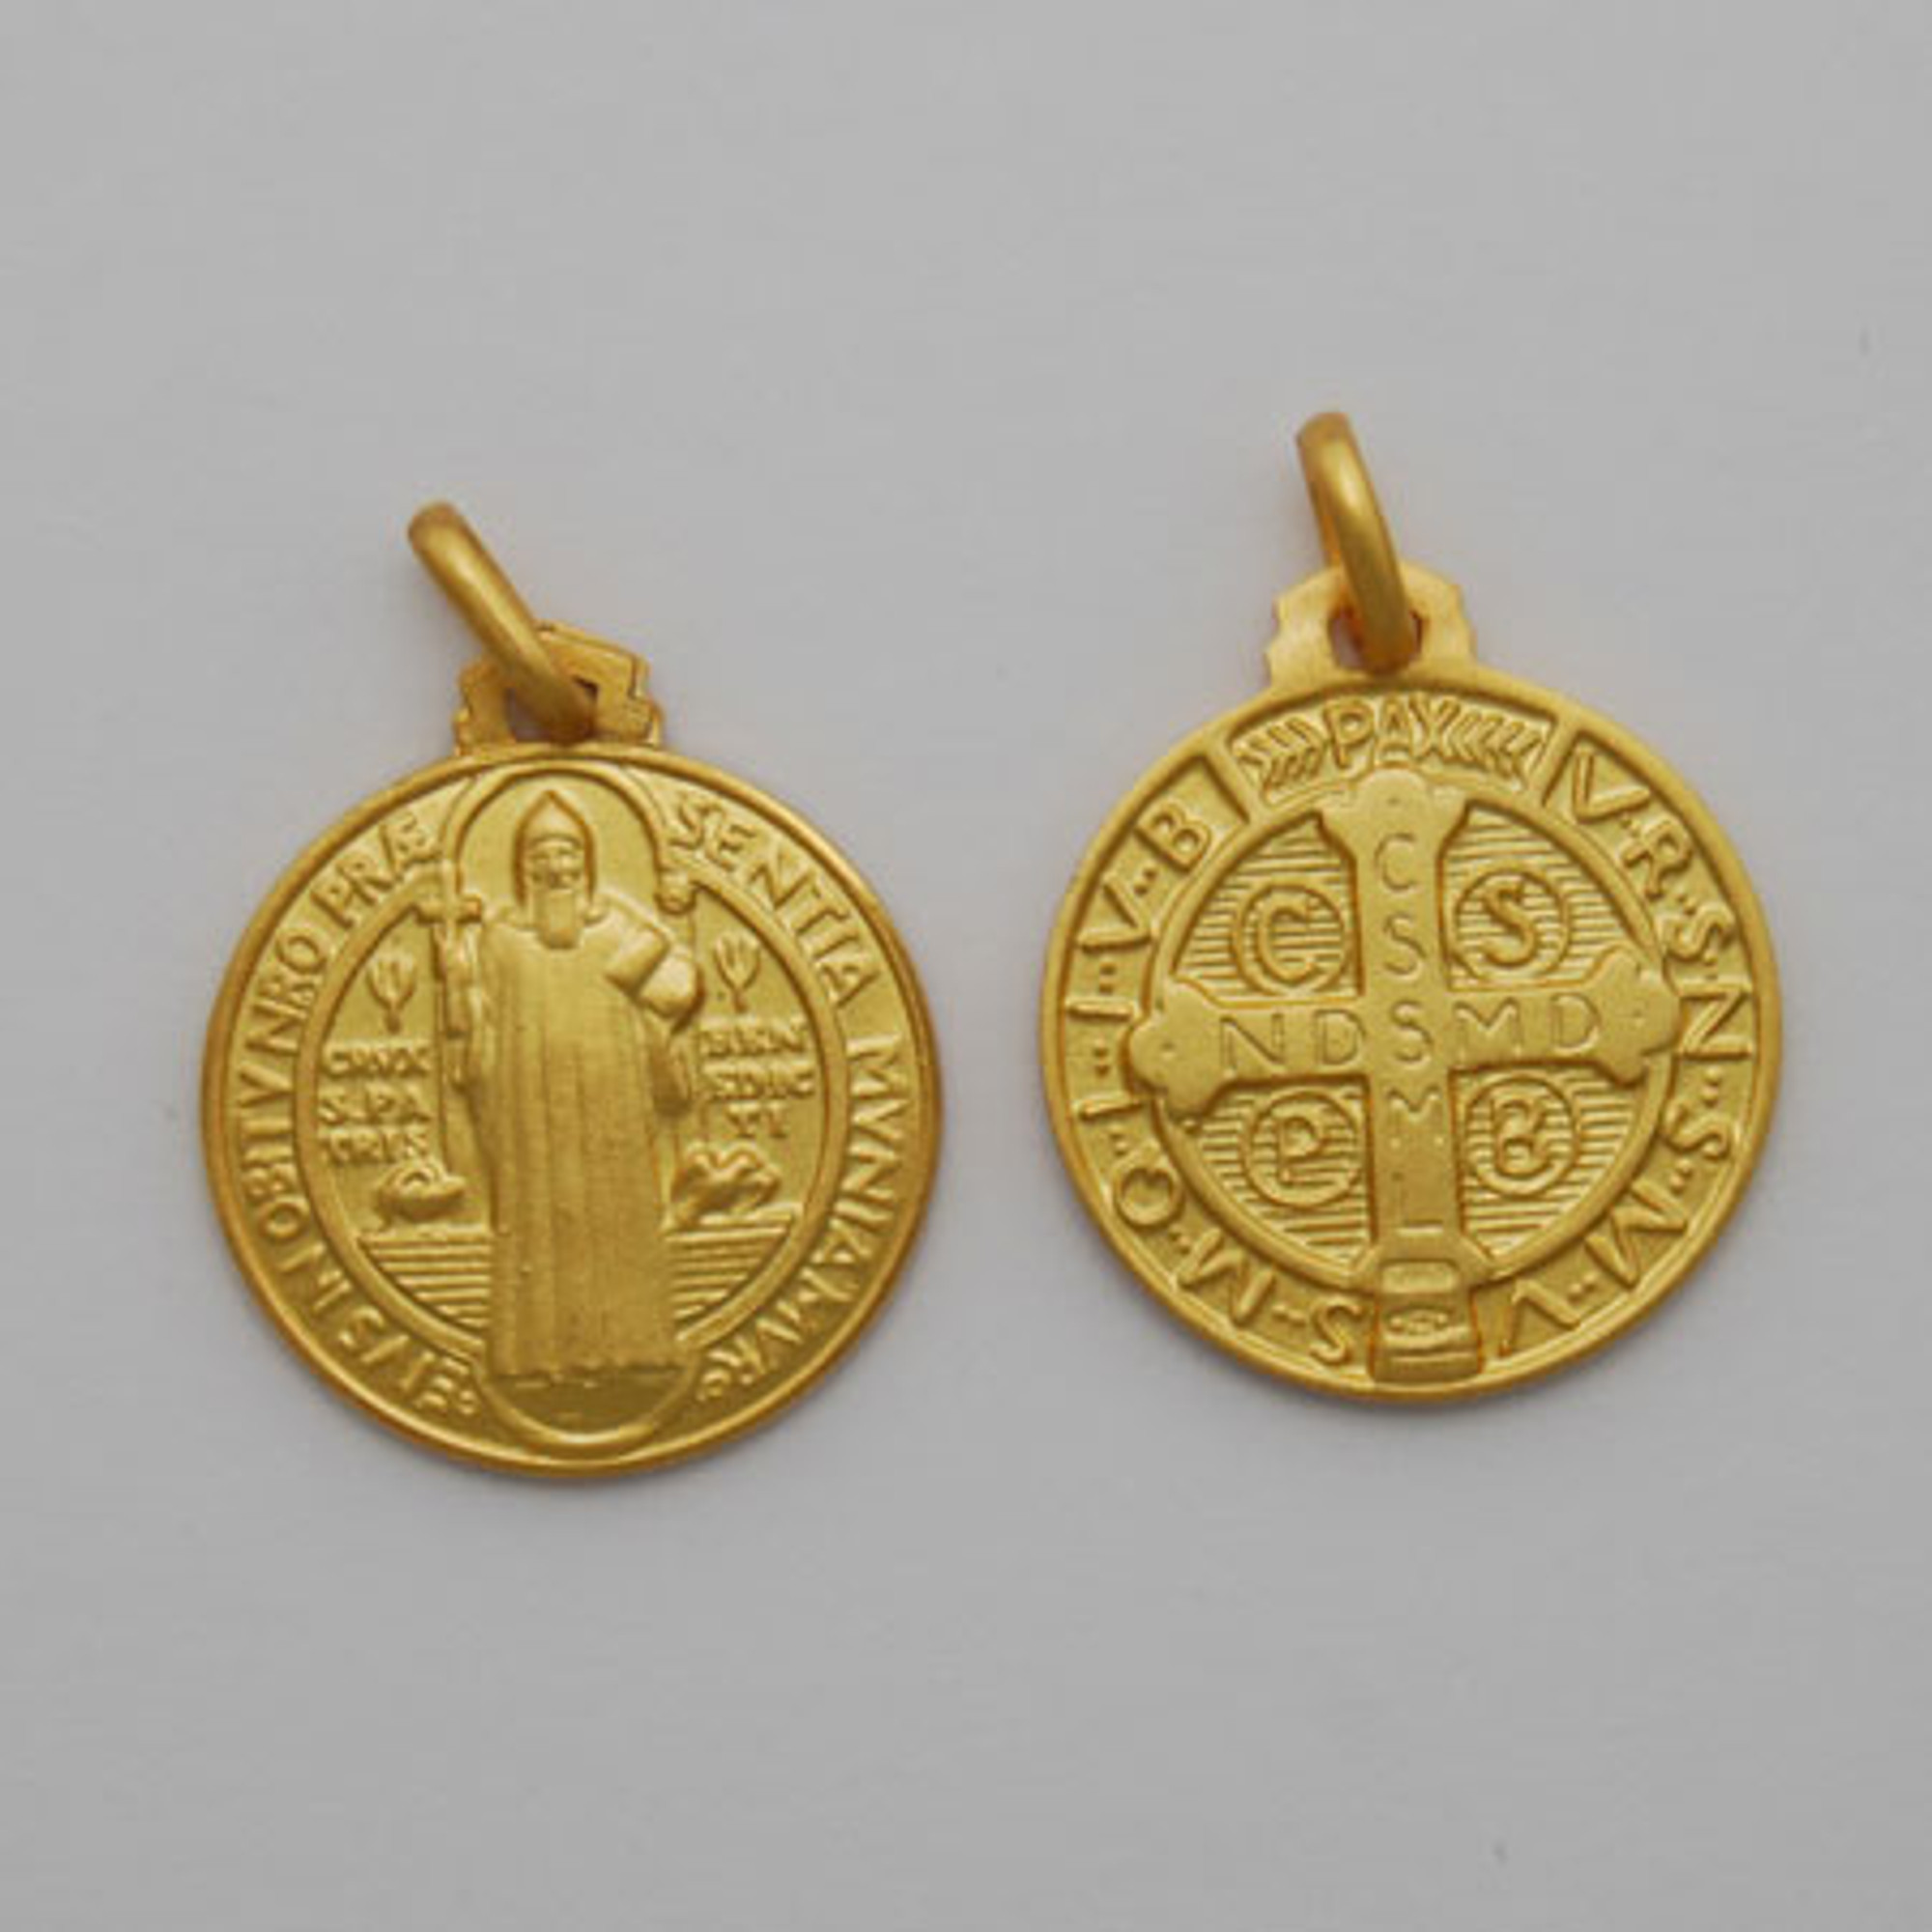 St. Benedict Medals - Round